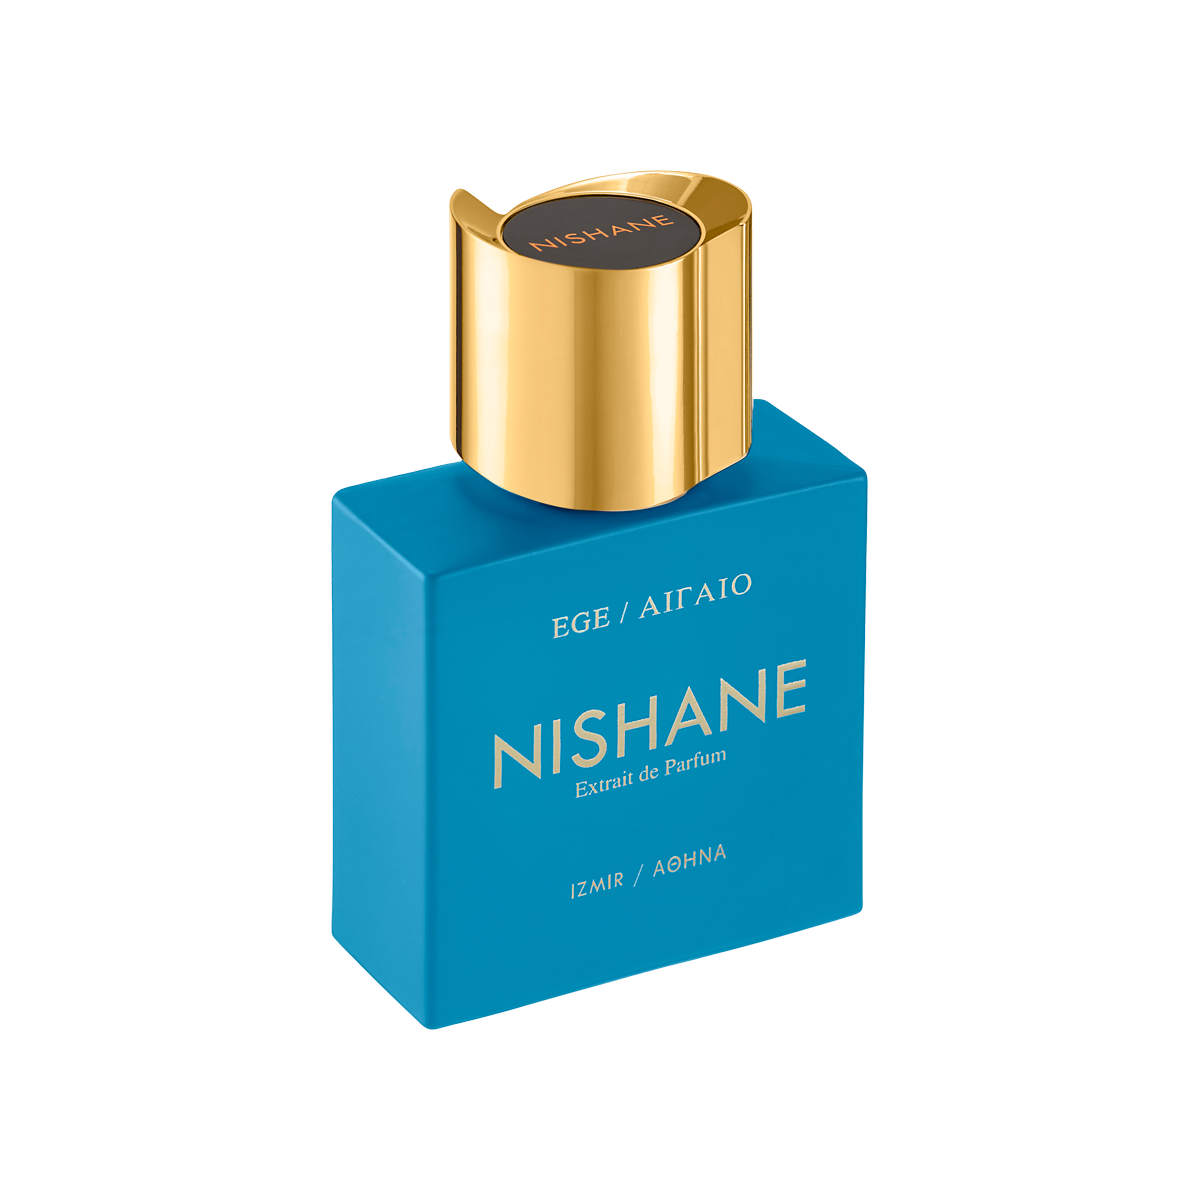 Nishane - Ege/ aiyaio Extrait de Parfum